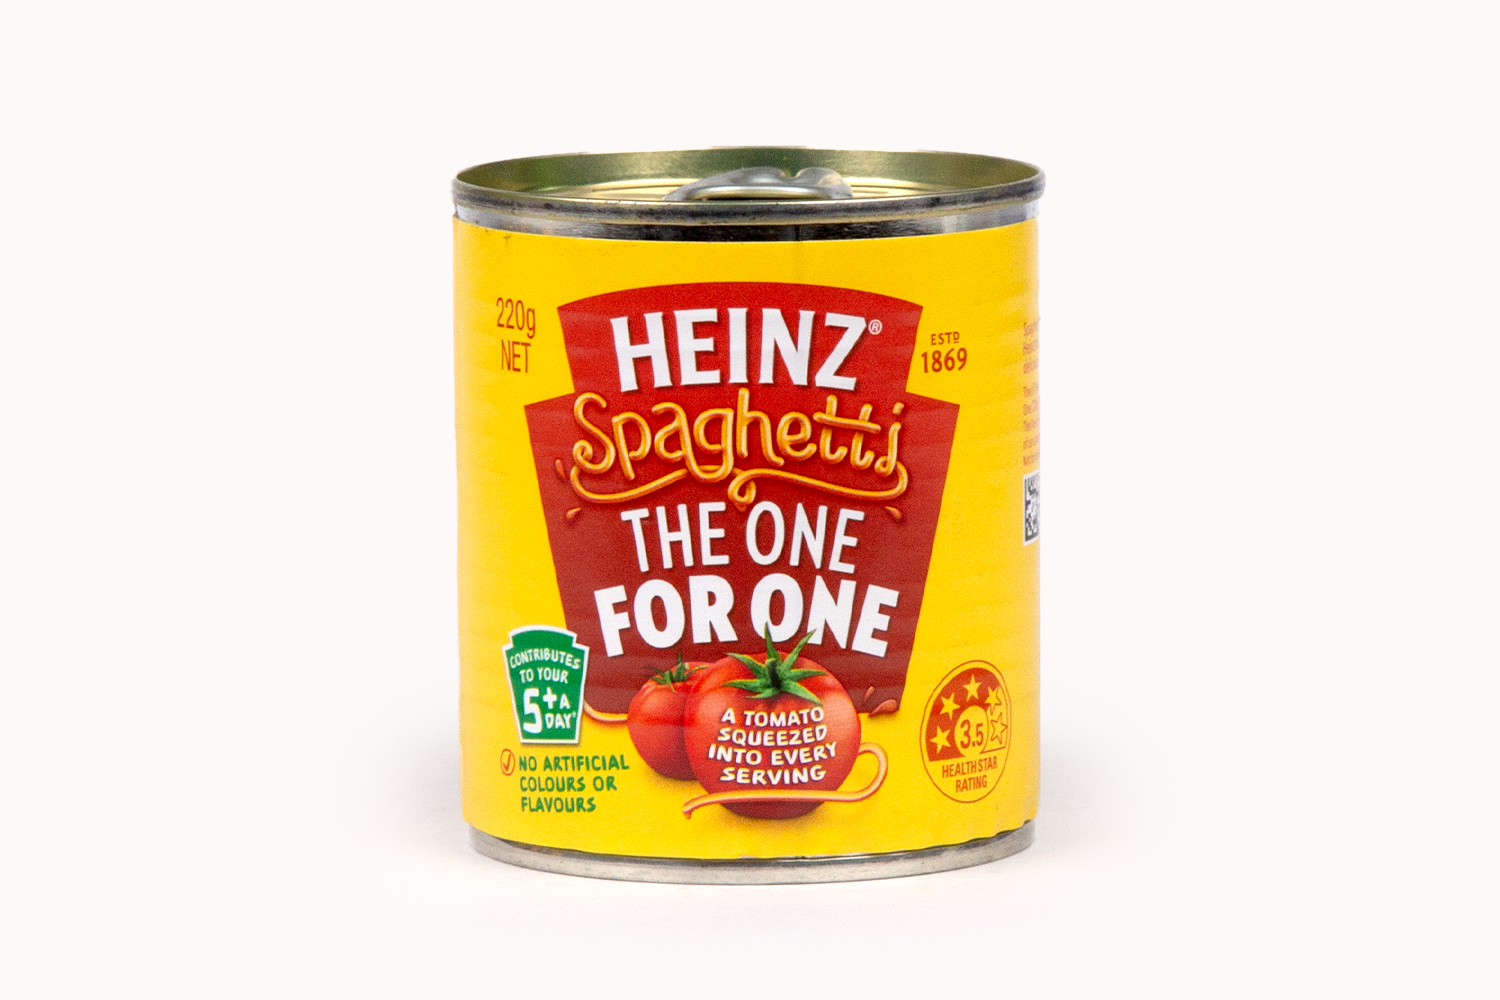 Heinz Spaghetti in Tomato Sauce Pasta